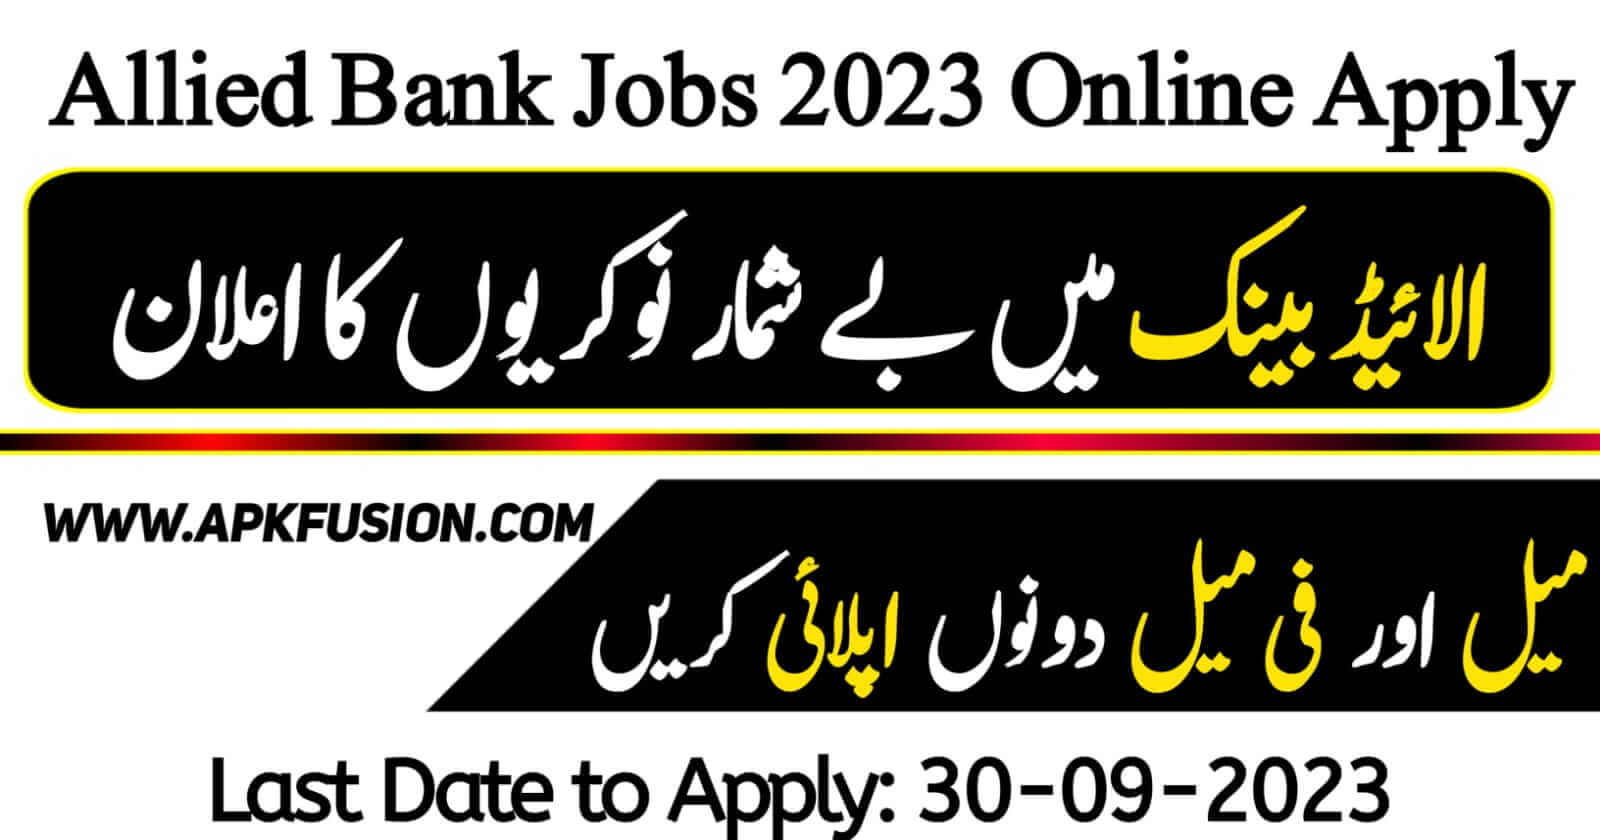 Allied Bank Jobs 2023 Online Apply